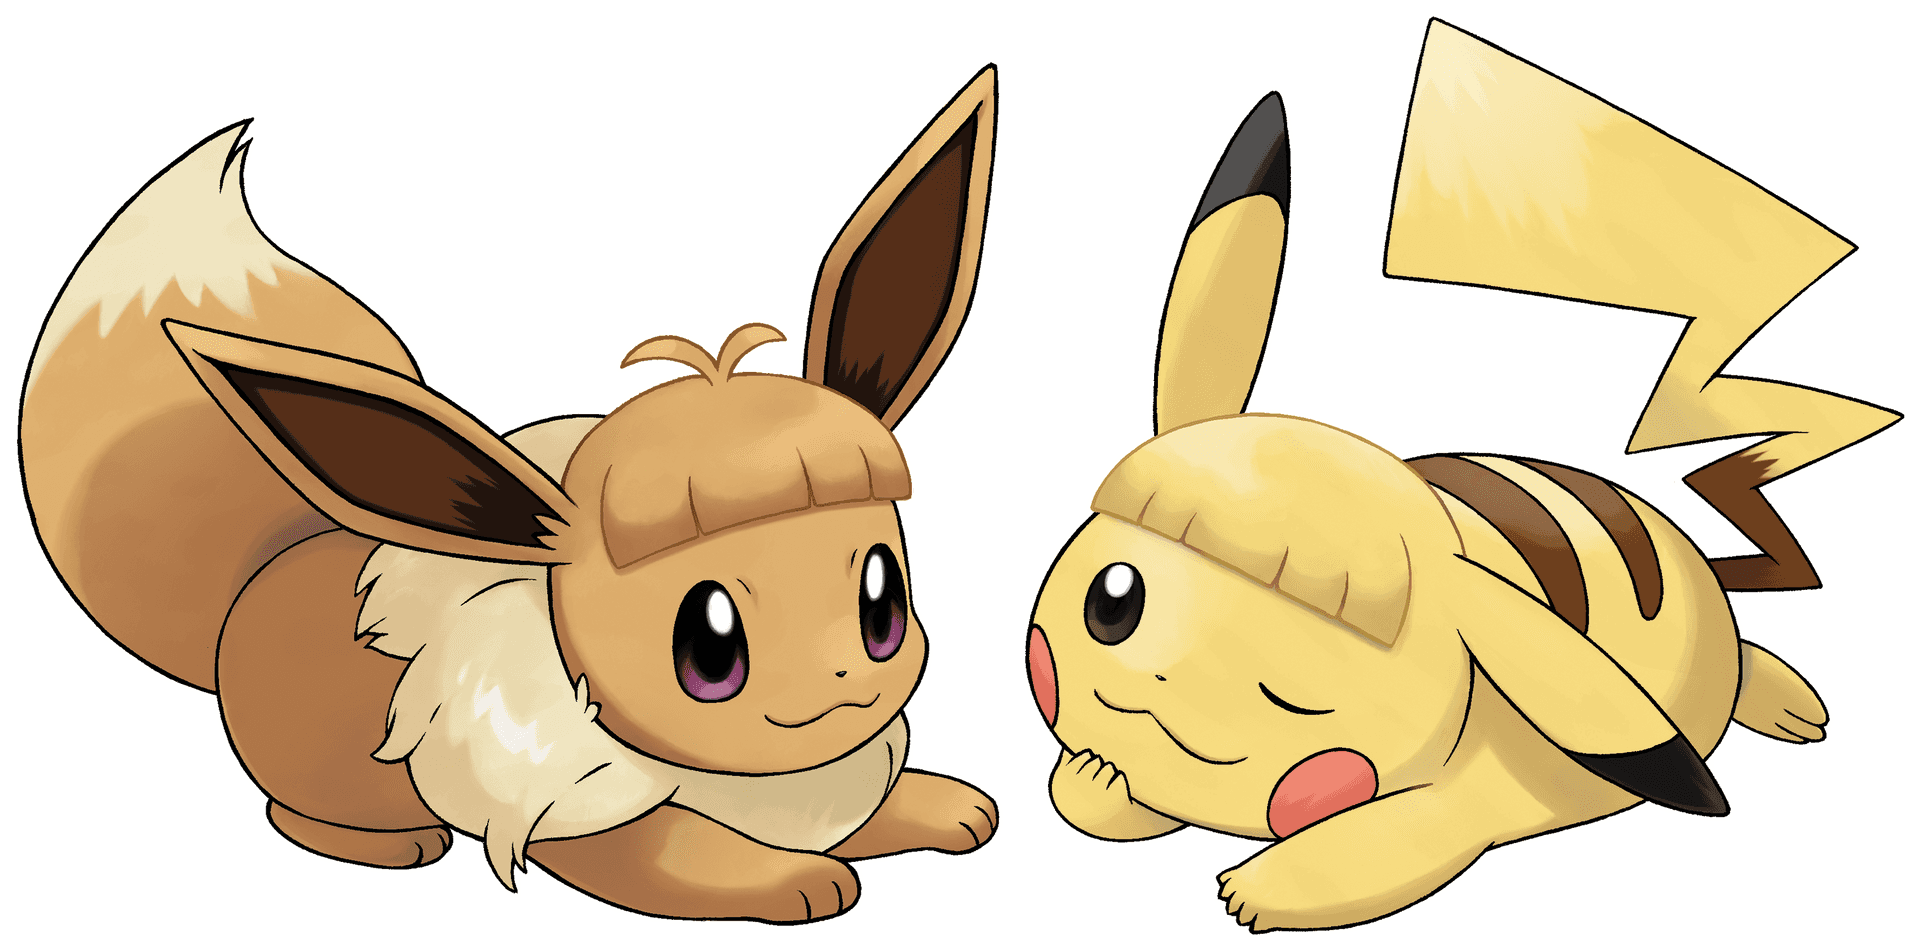 Eeveeand Pikachu Friends Illustration PNG